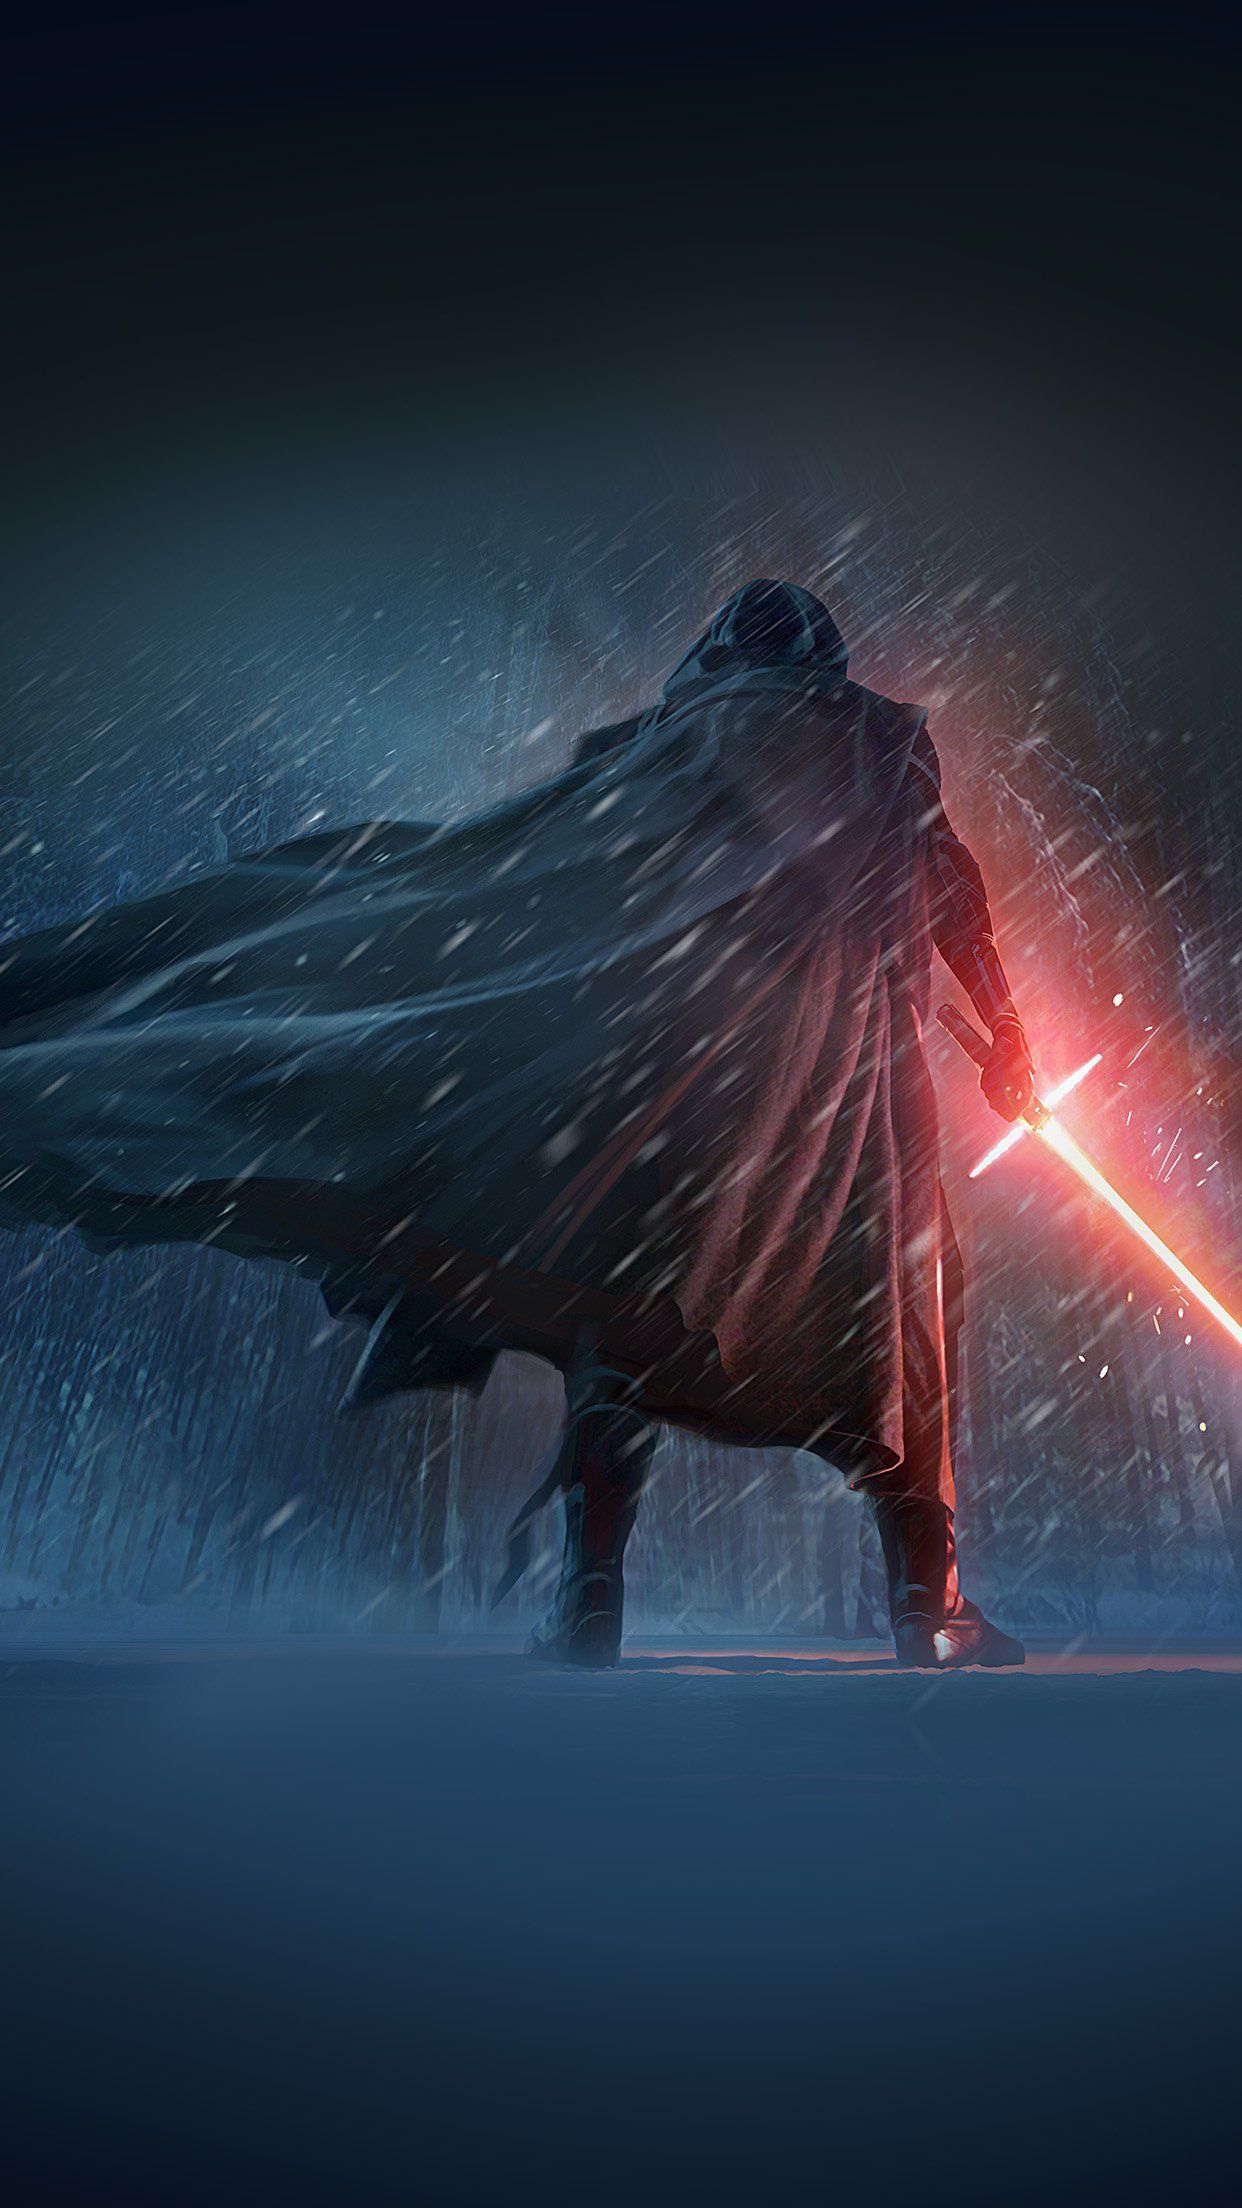 Darth Vader Starwars 7 Poster Film Art Android wallpaper